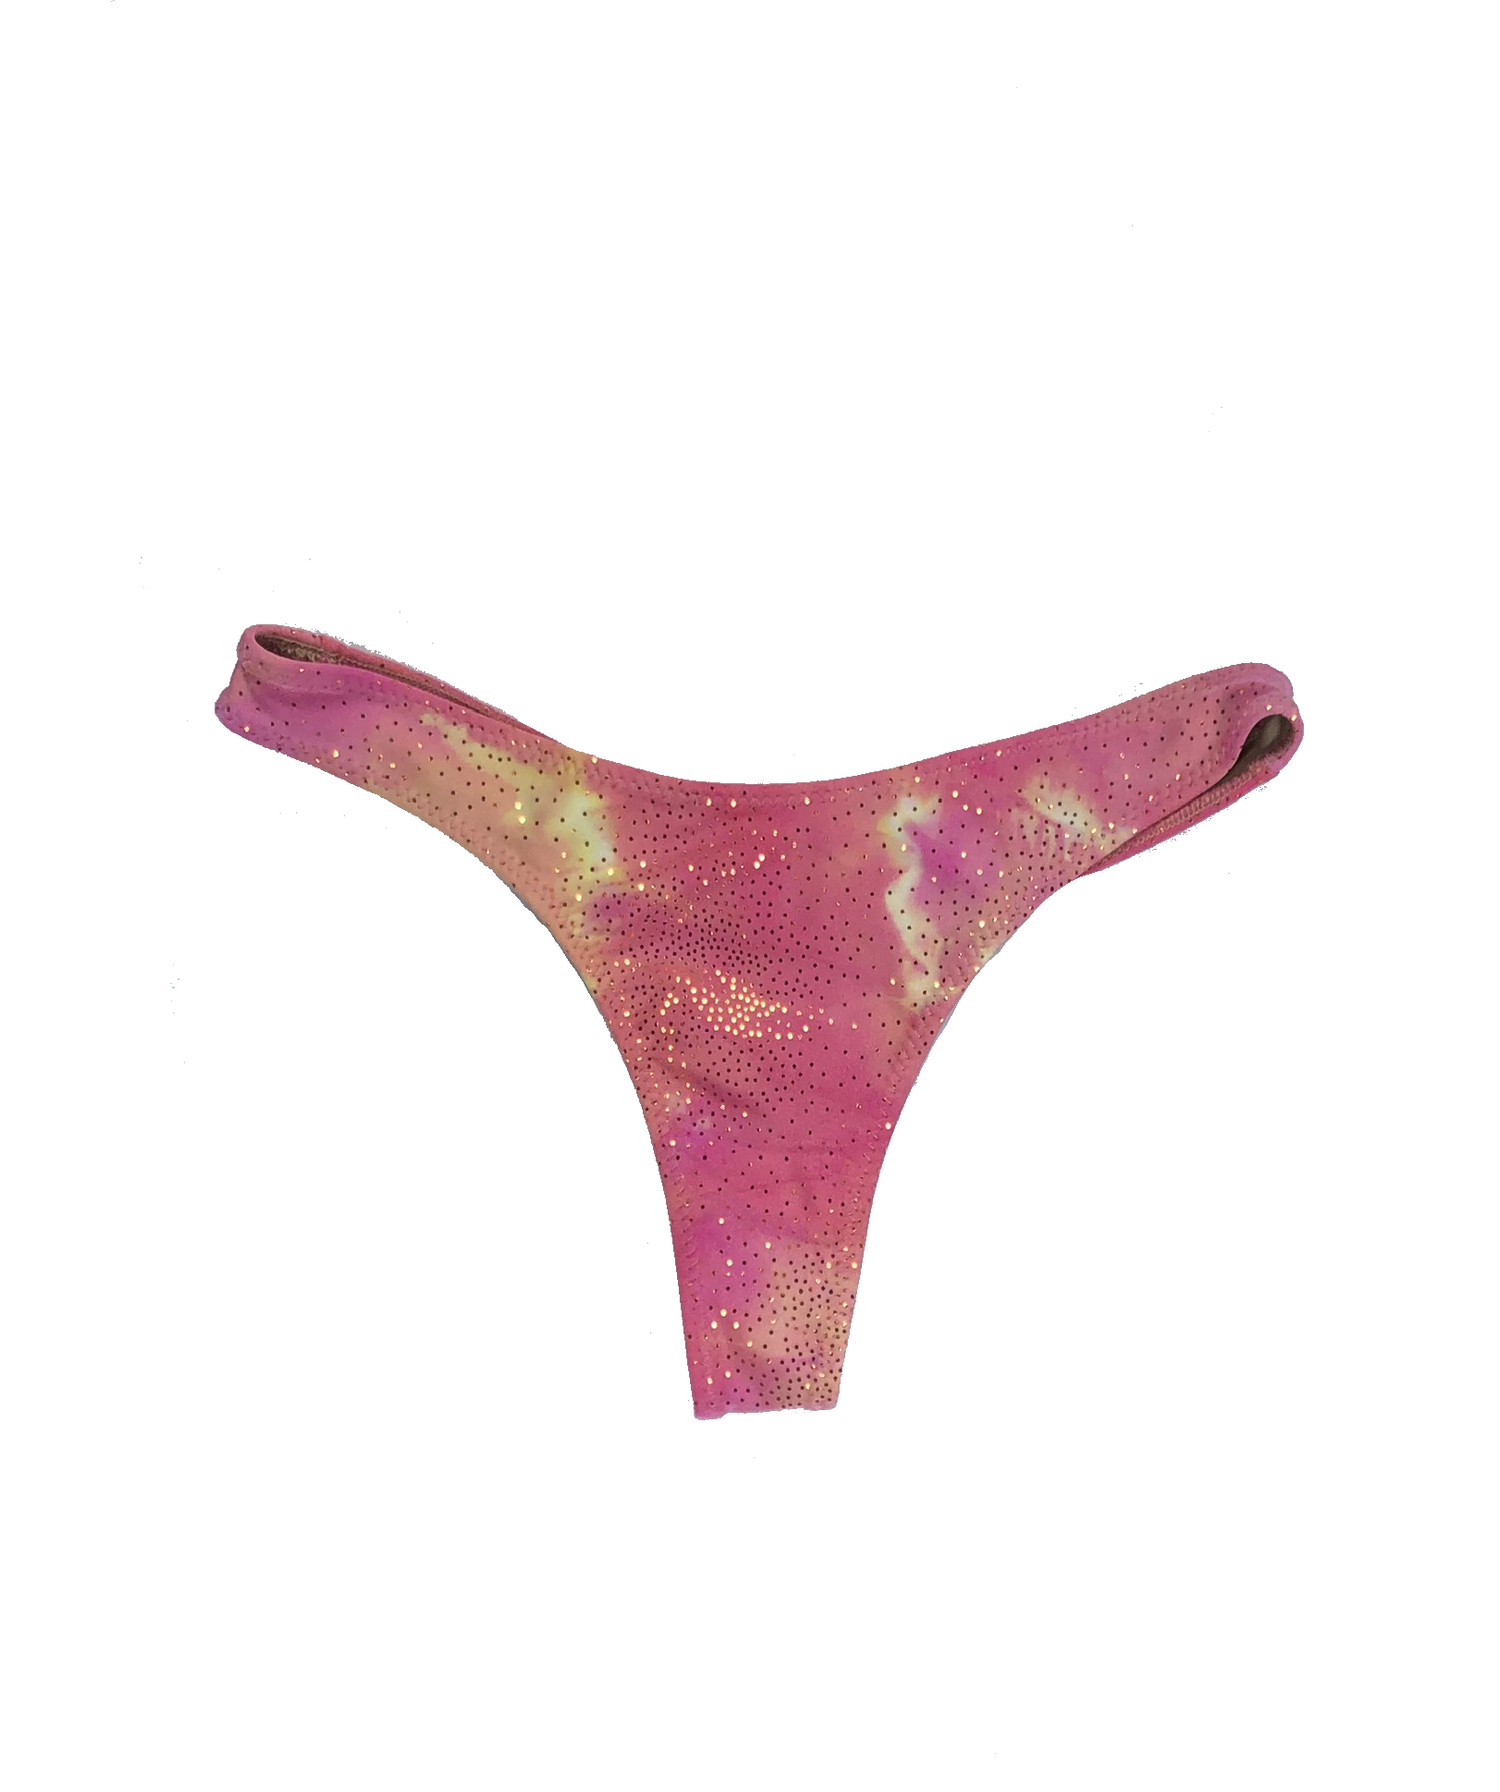 wendolin-designs - Wendolin Designs - Bikini bottom - High Leg Thong Style Bottom - Color Pink And Gold